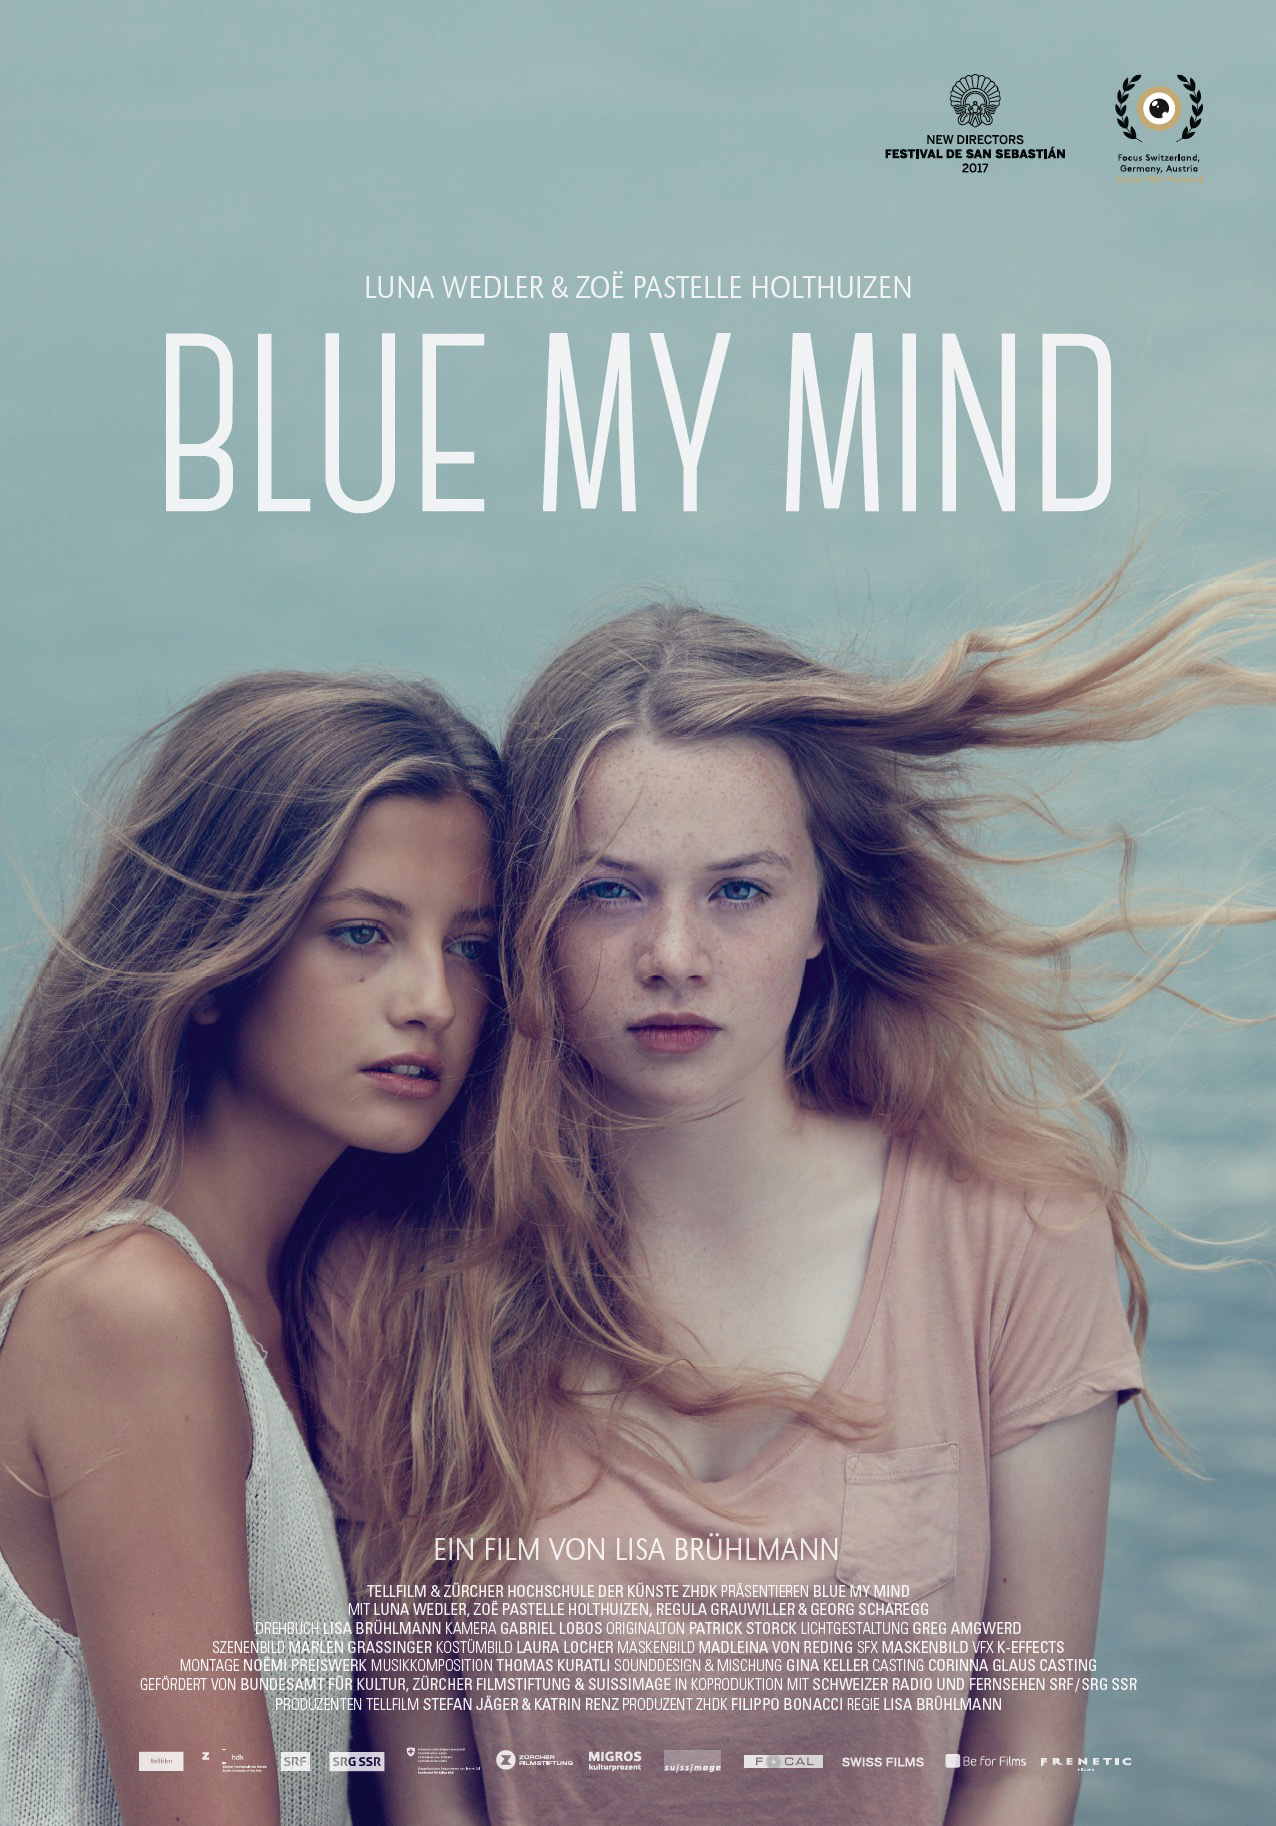 Nonton film Blue My Mind layarkaca21 indoxx1 ganool online streaming terbaru